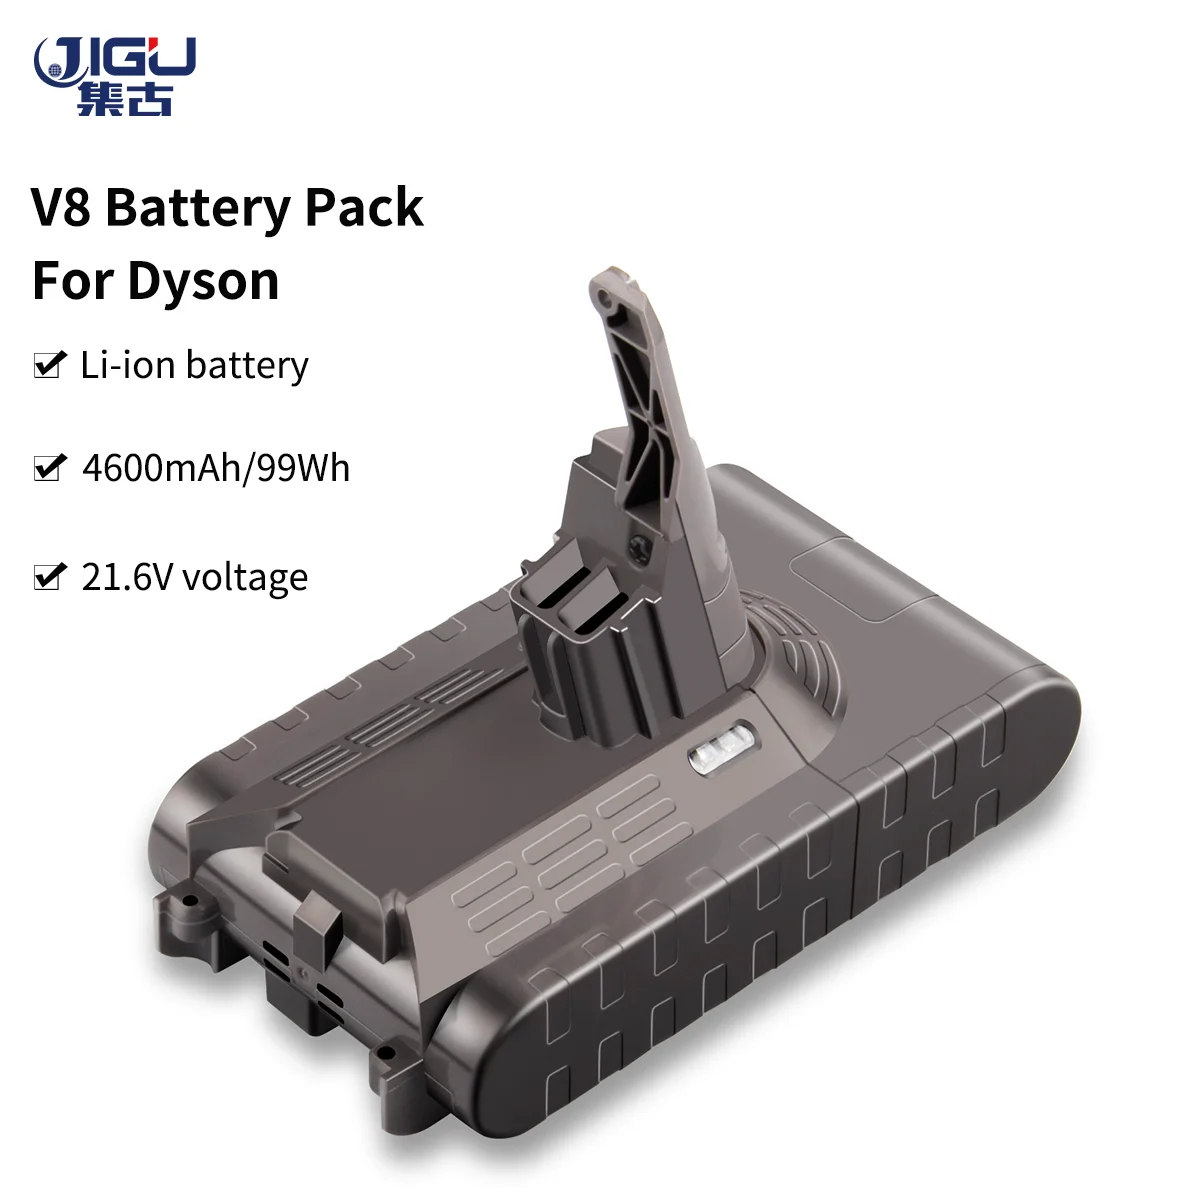 

JIGU V8 4600 мА/ч, 21,6 V Батарея для Dyson V8 Батарея V8 серии,V8 пушистый Li-Ion SV10 пылесос Перезаряжаемые Батарея L70